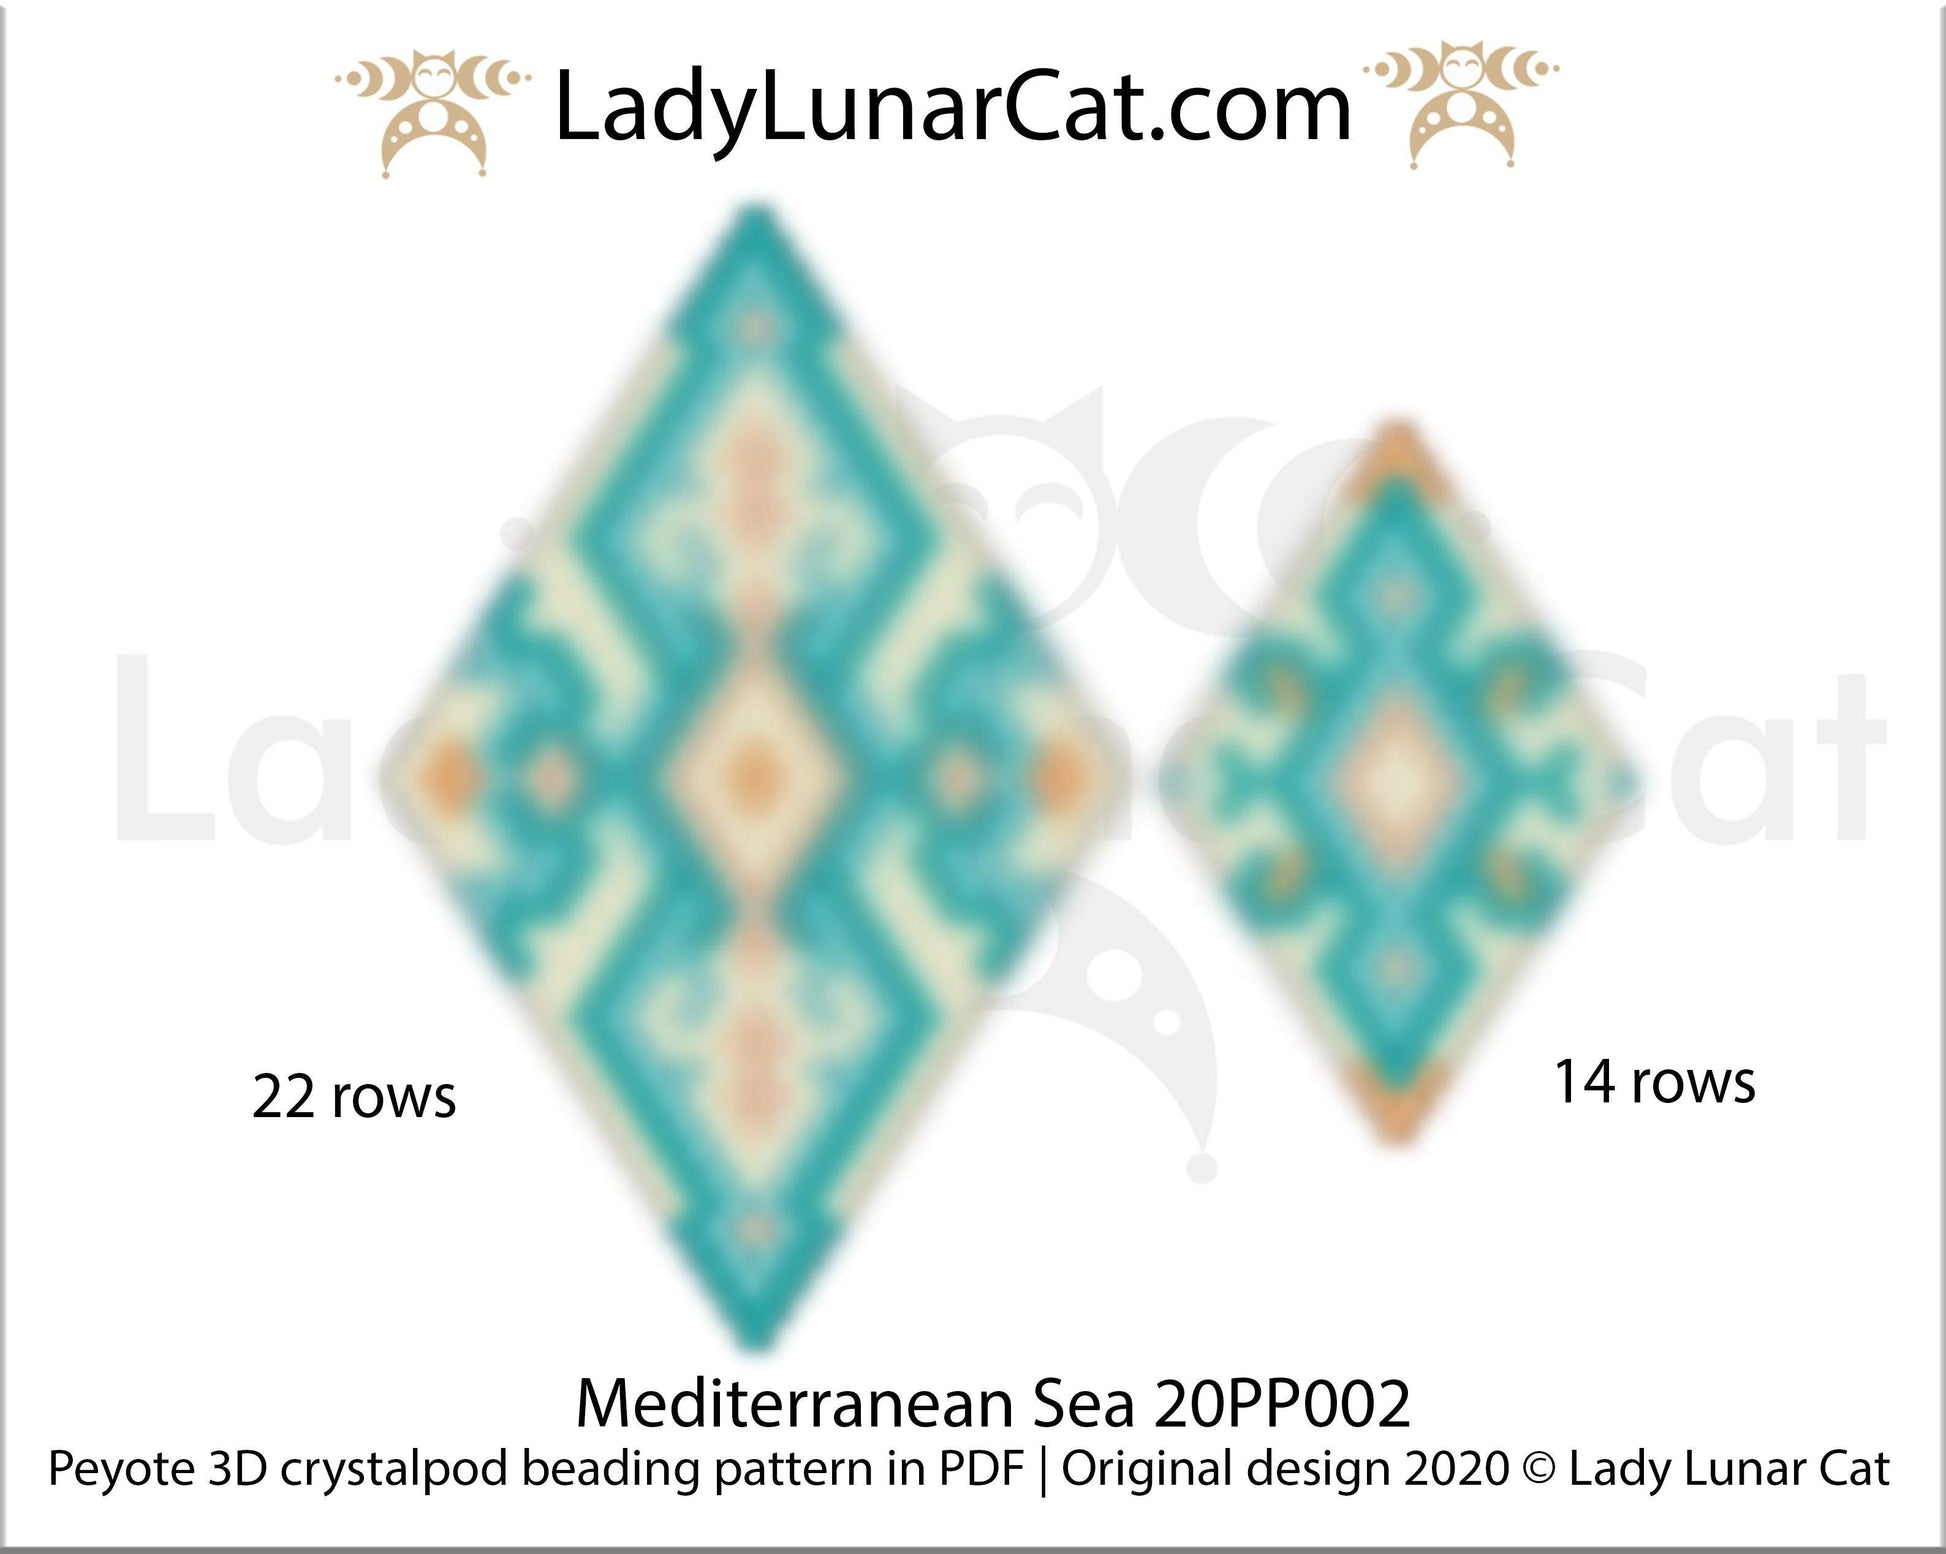 Peyote 3D pod Mediterranean Sea 20PP002 LadyLunarCat